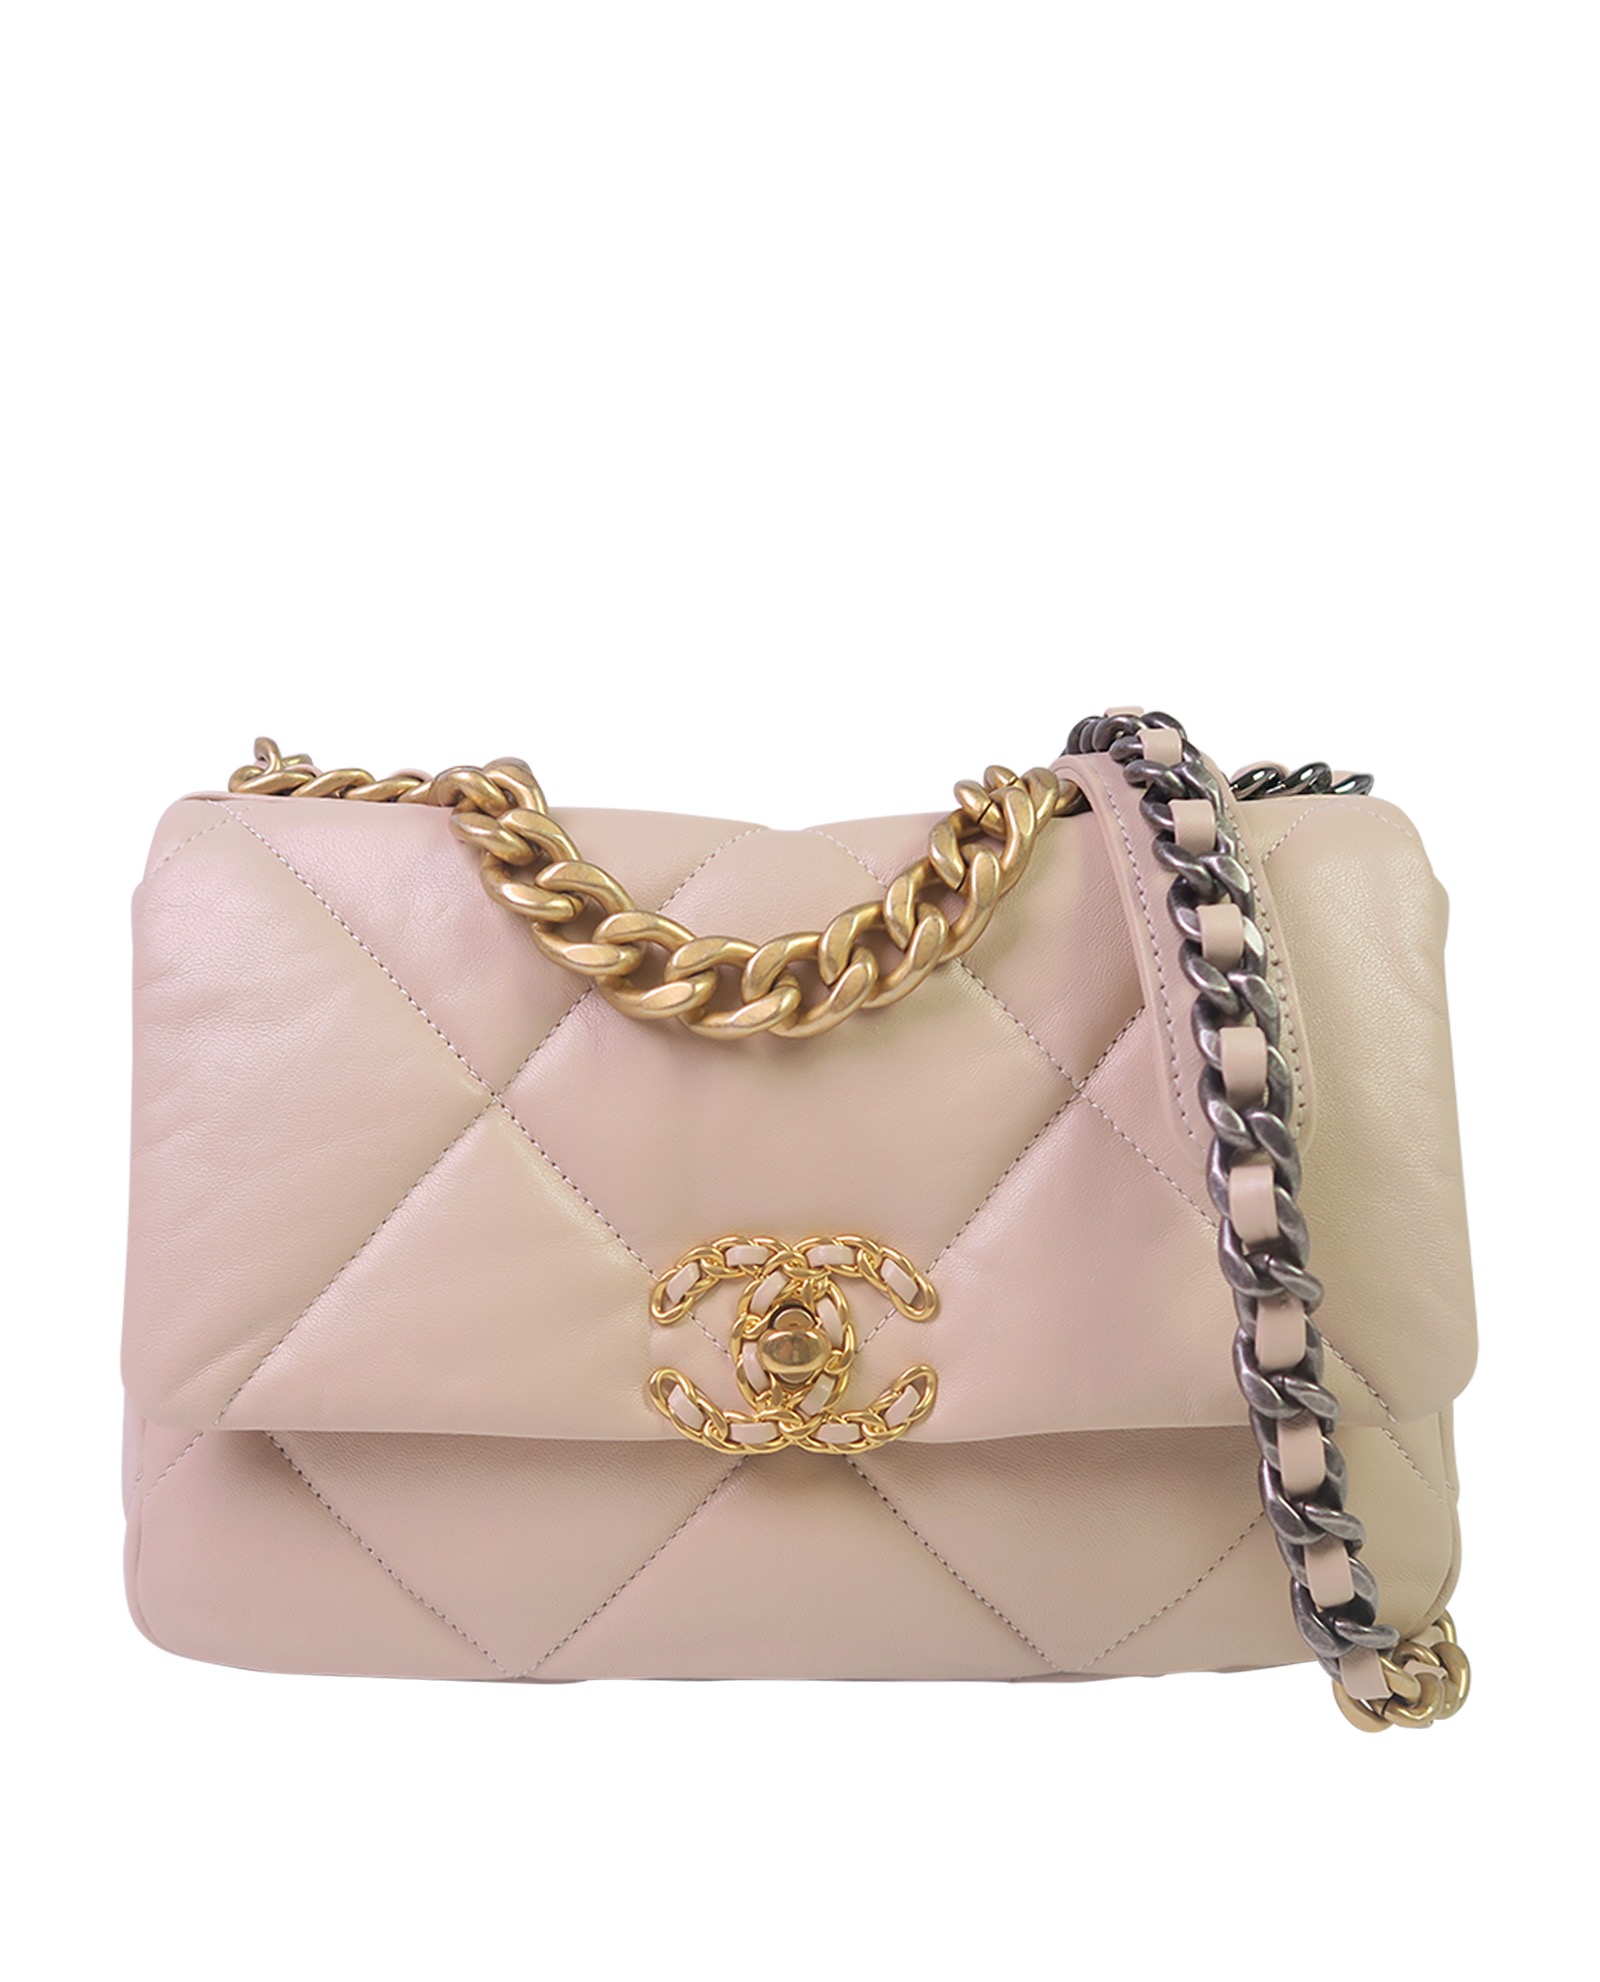 Handbag Review: Medium Chanel 19 The Teacher Diva: A Dallas Fashion Blog  Featuring Beauty Lifestyle